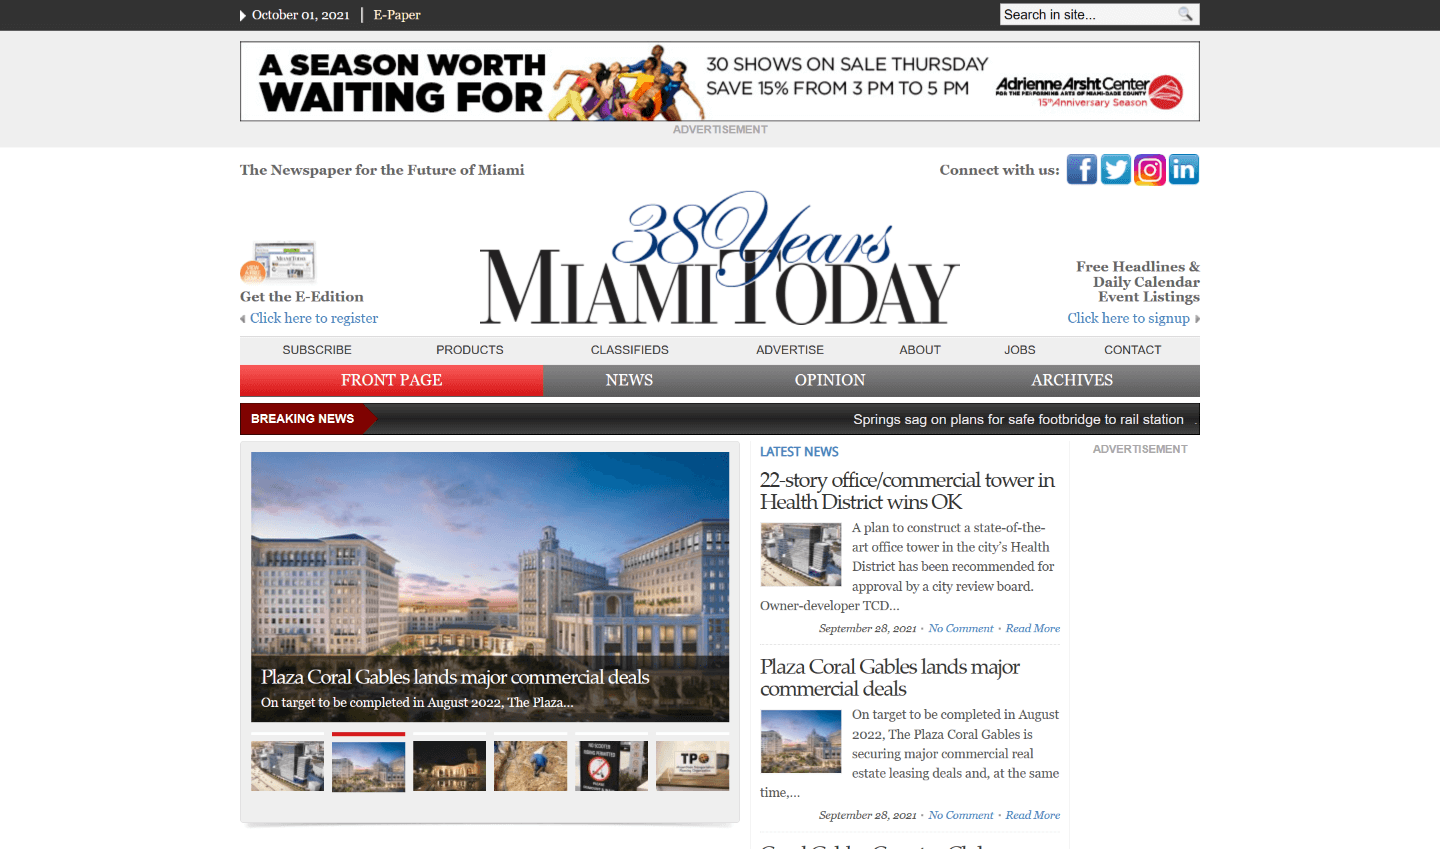 Miami Newspapers 19 Miami Today website